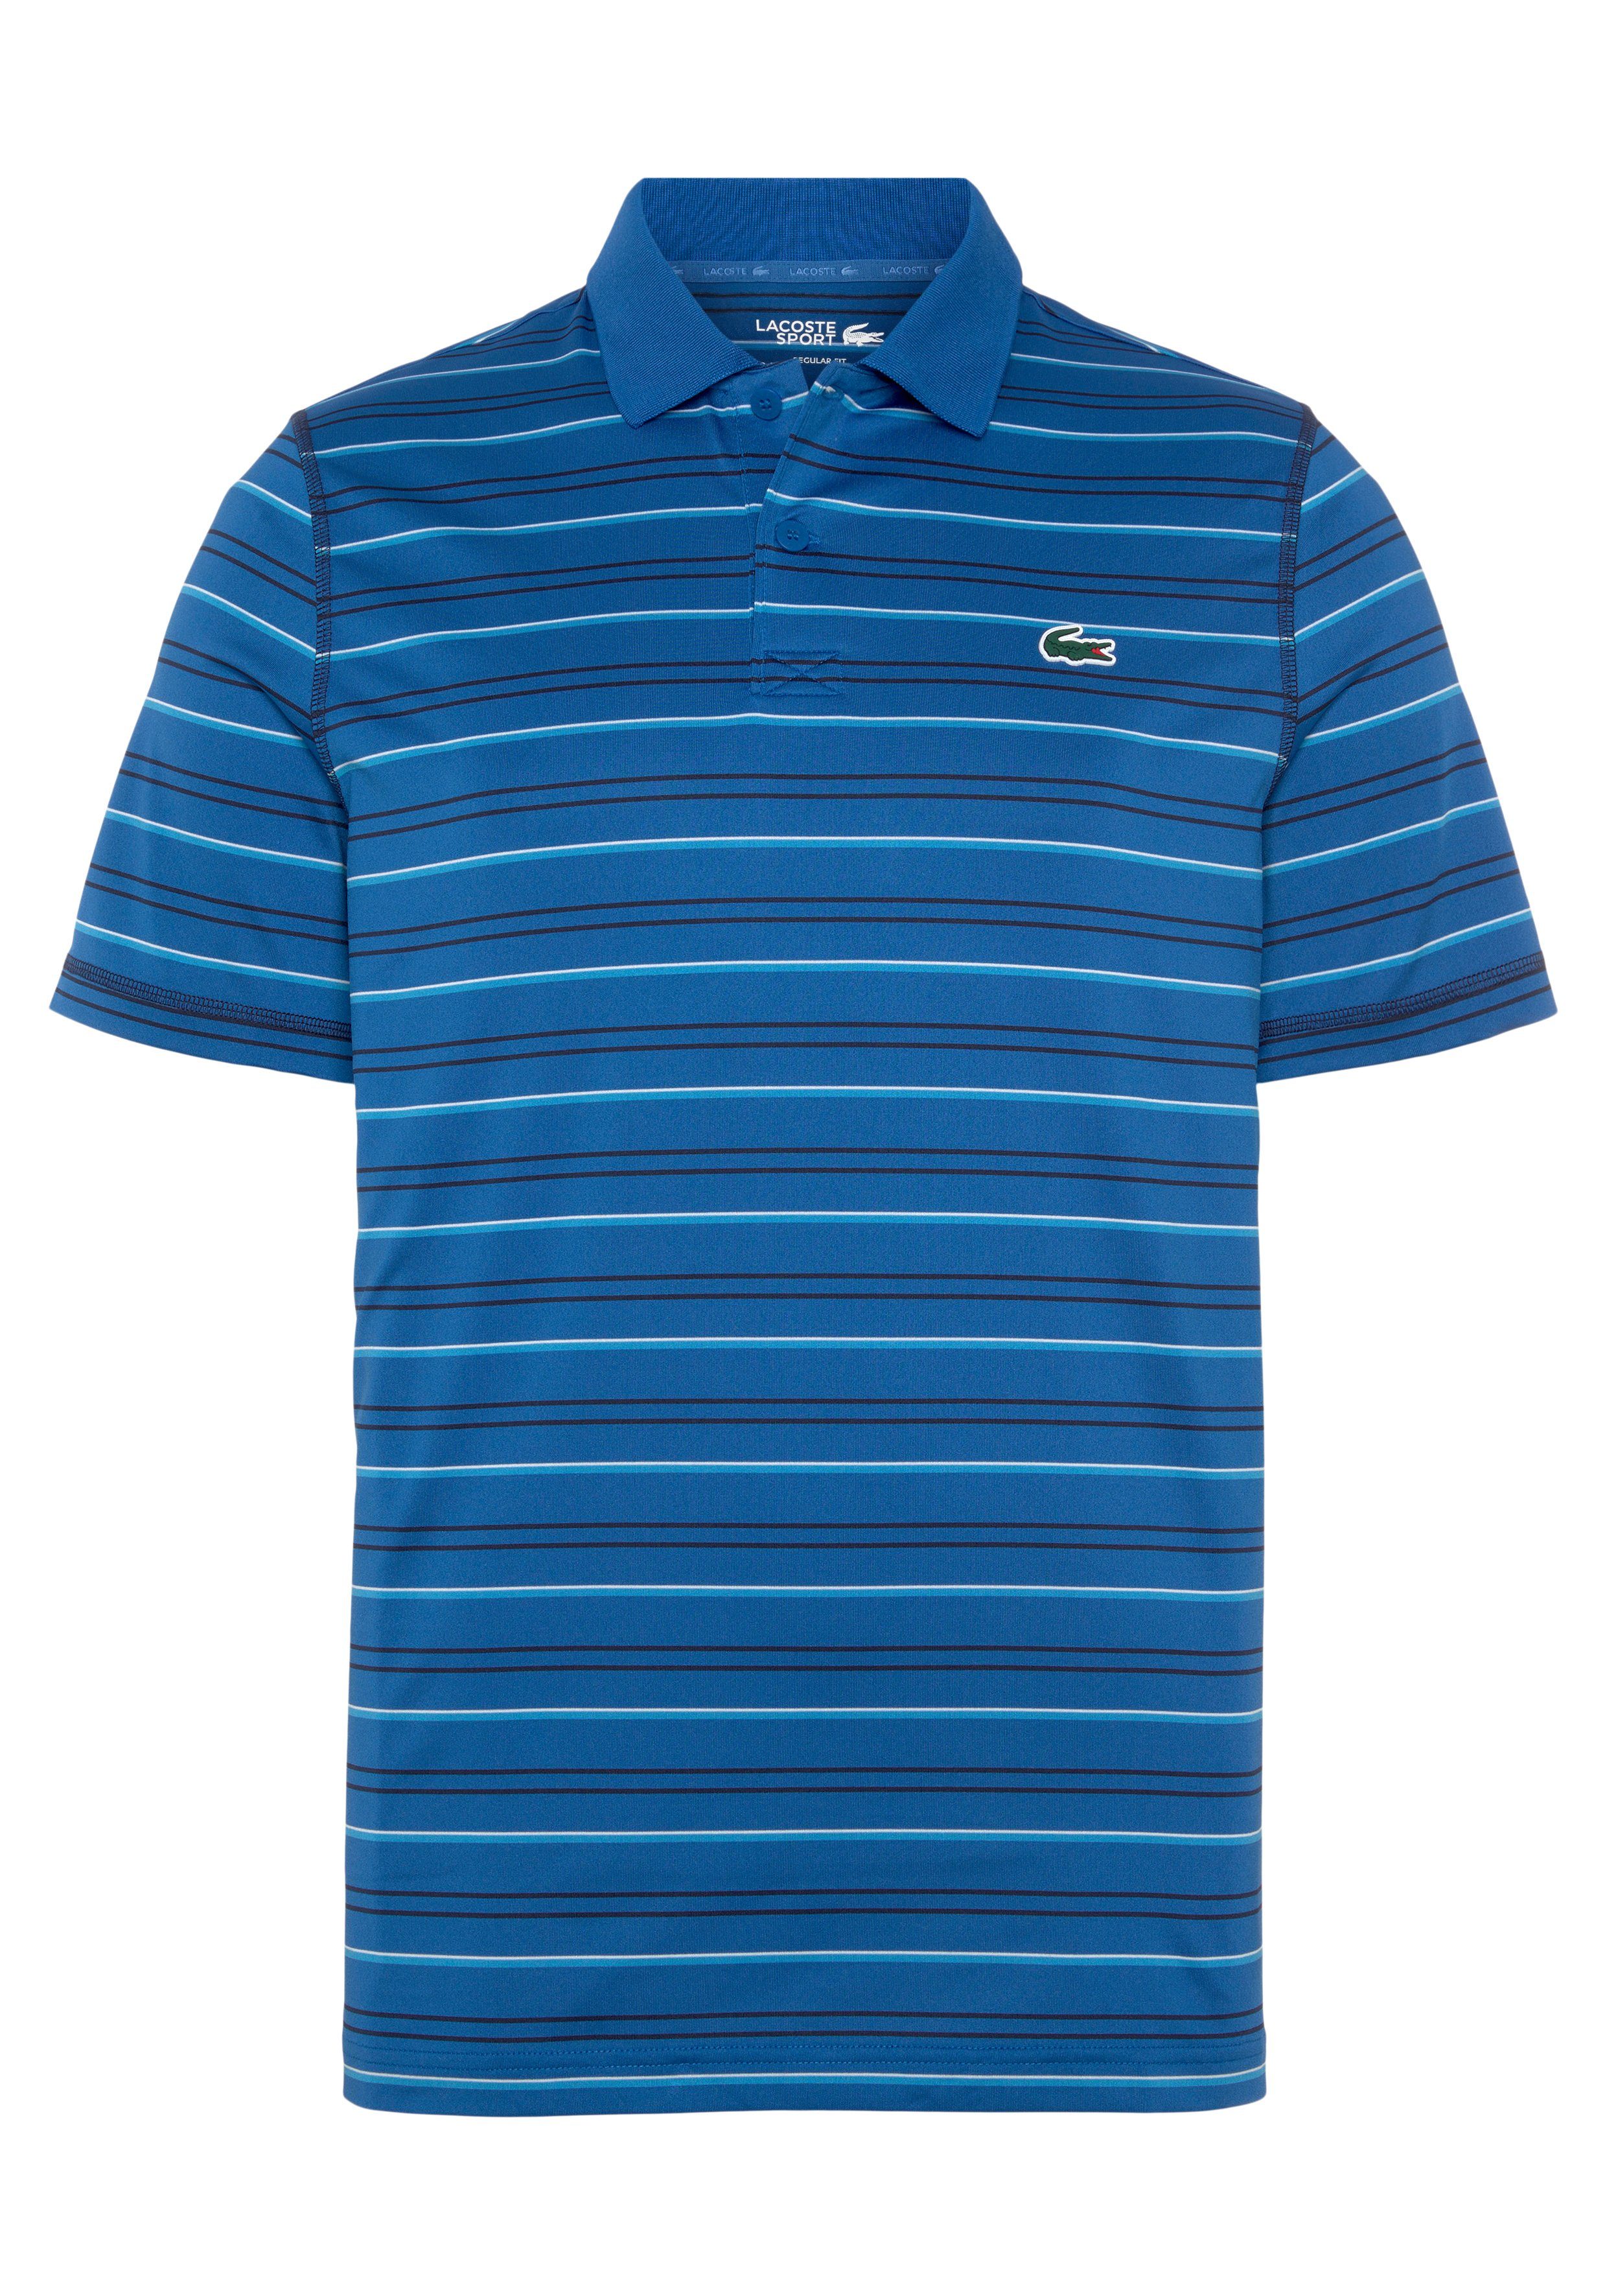 Lacoste Poloshirt recyceltes Polyester, atmungsaktives Golf Polo Shirt